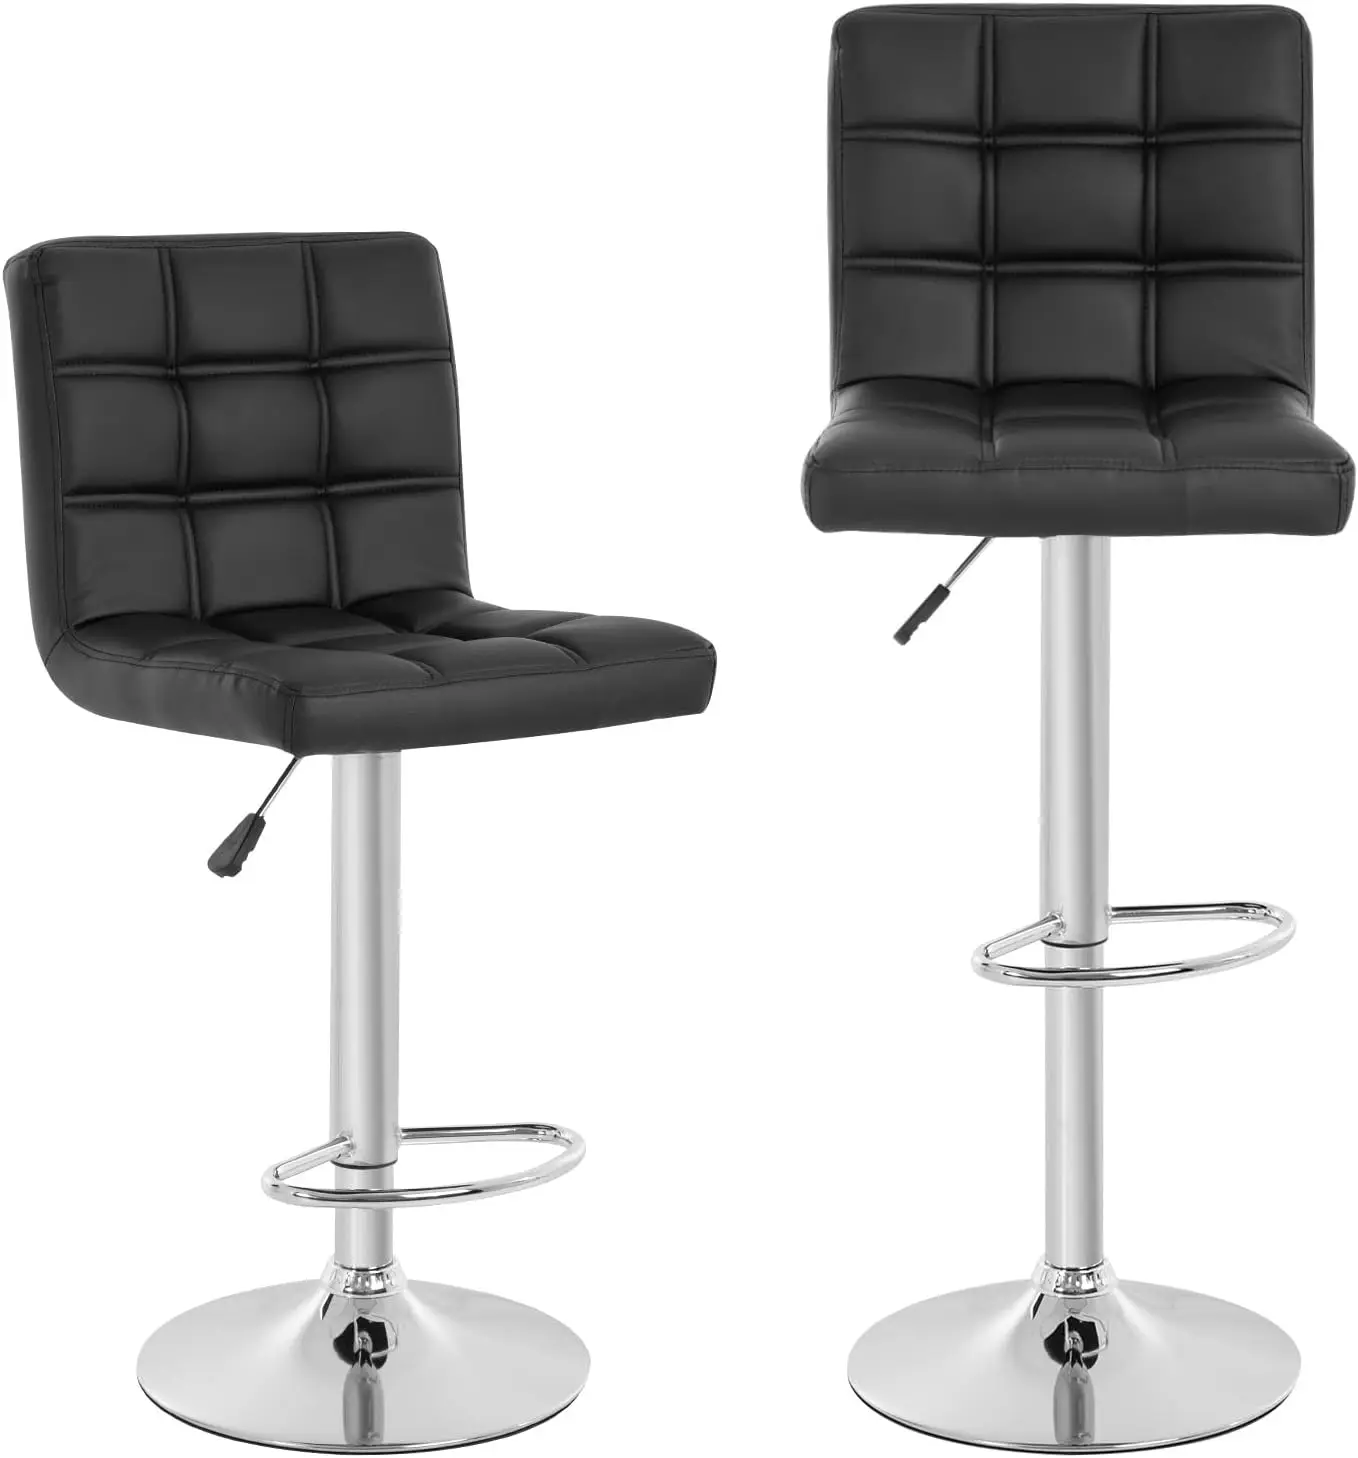 

Modern Bar Stool Set of 2 Barstools Height Adjustable Counter Height Swivel Bar Stool PU Leather Bar Chairs Hydraulic